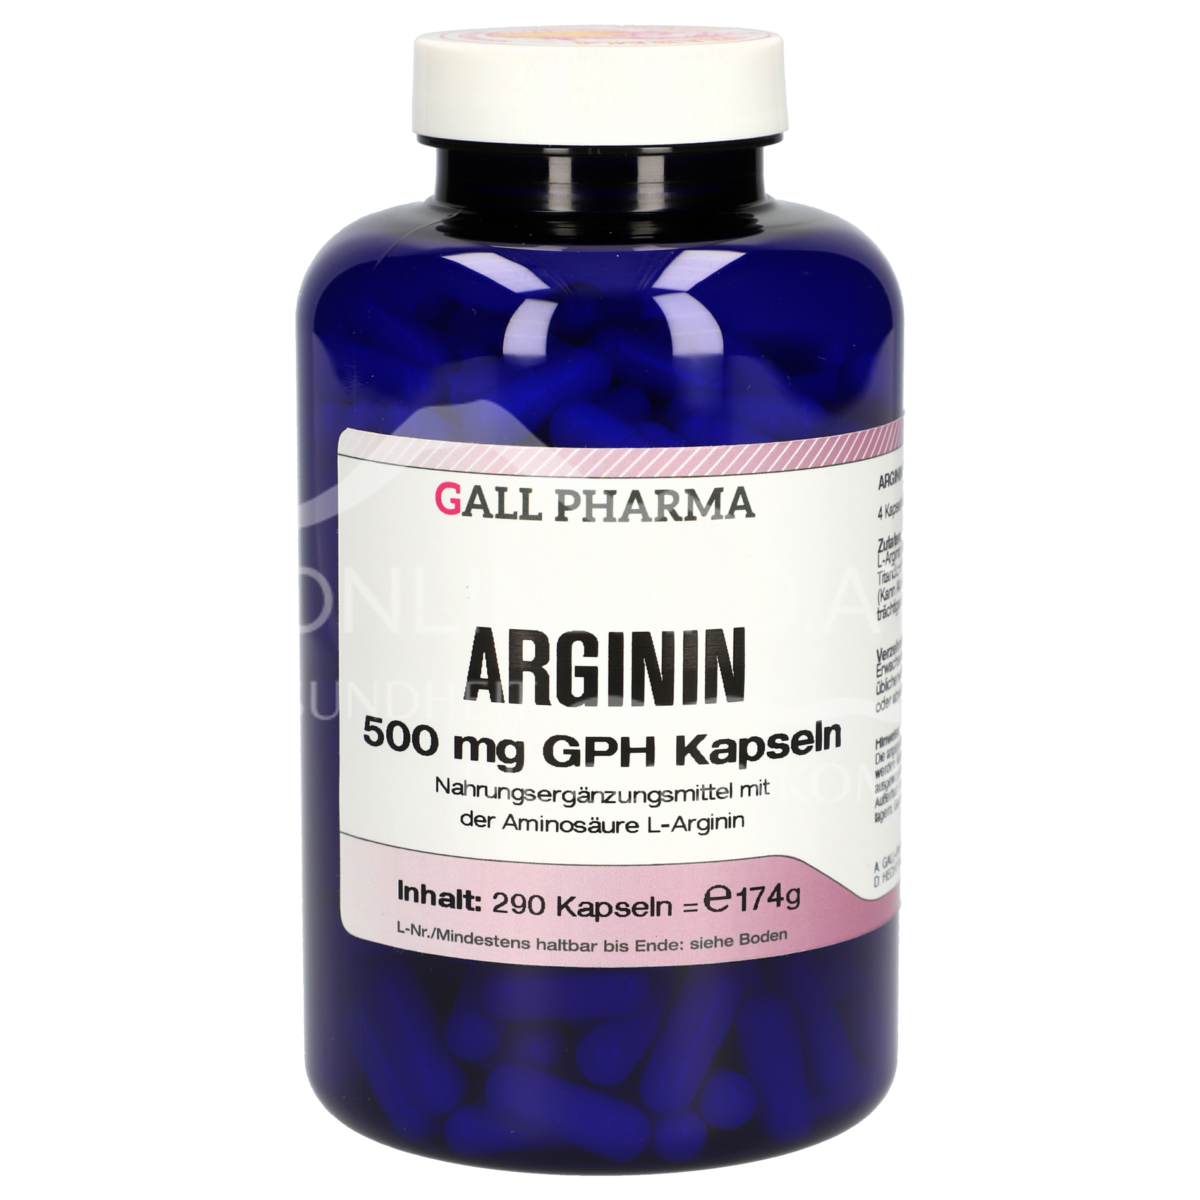 Gall Pharma Arginin 500 mg Kapseln